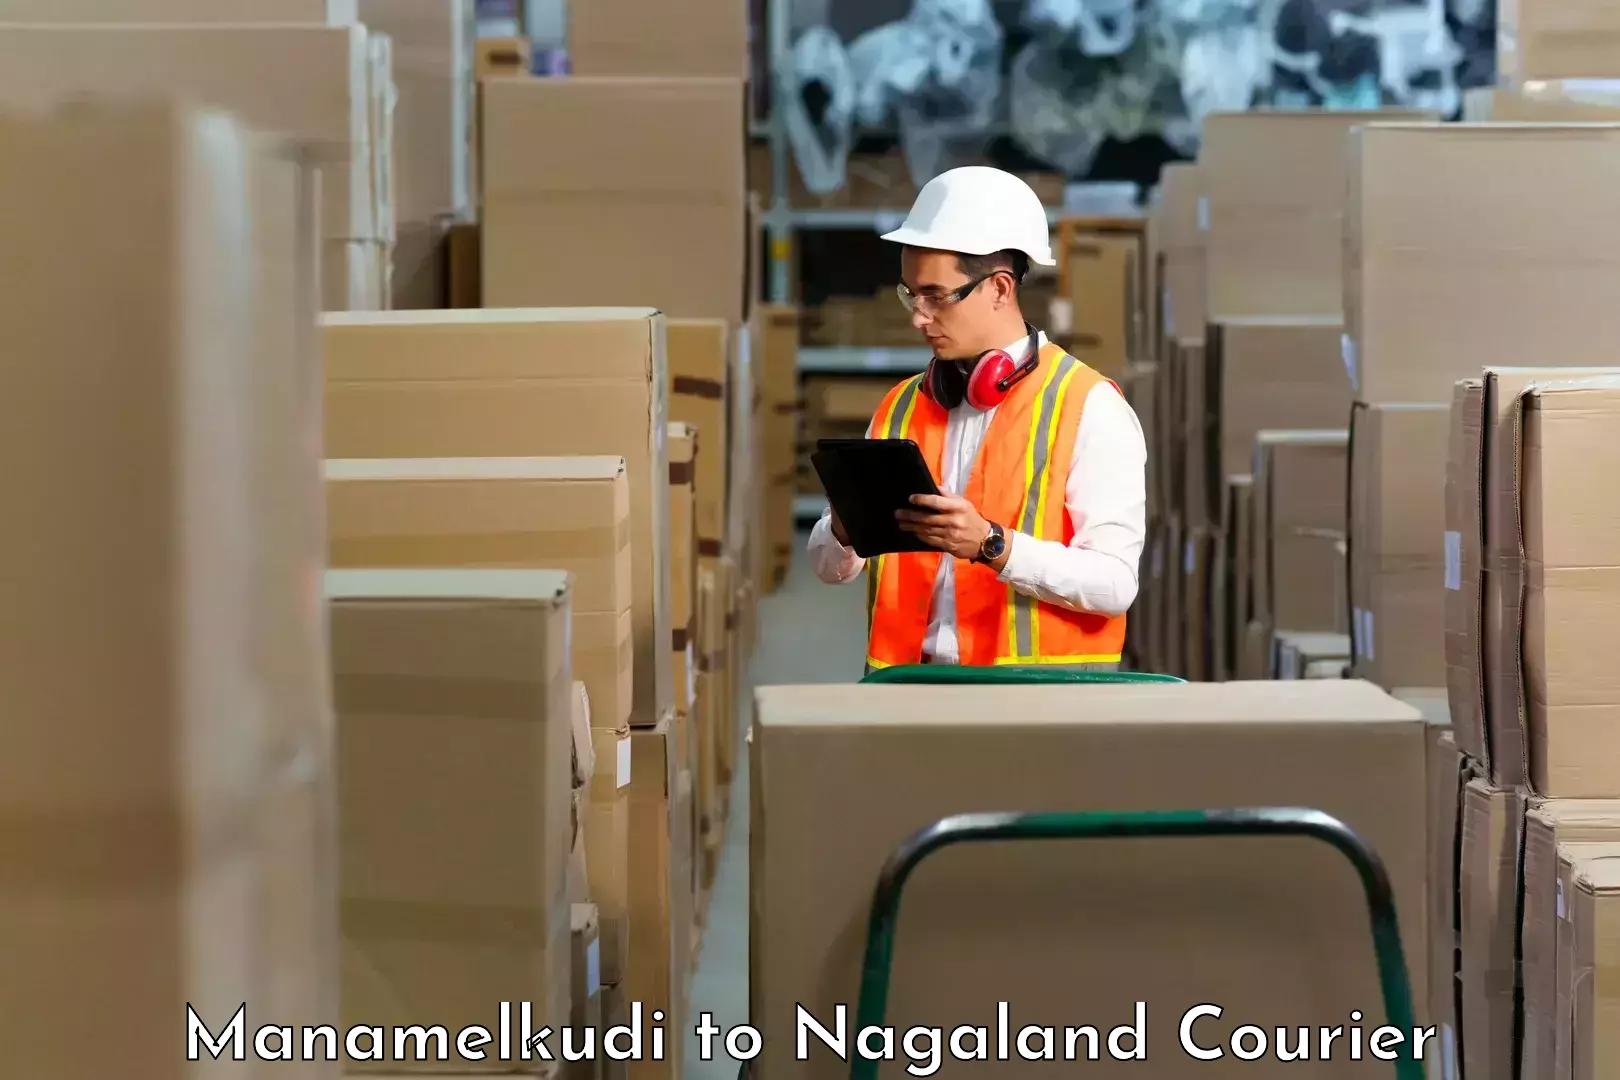 Fast delivery service Manamelkudi to NIT Nagaland